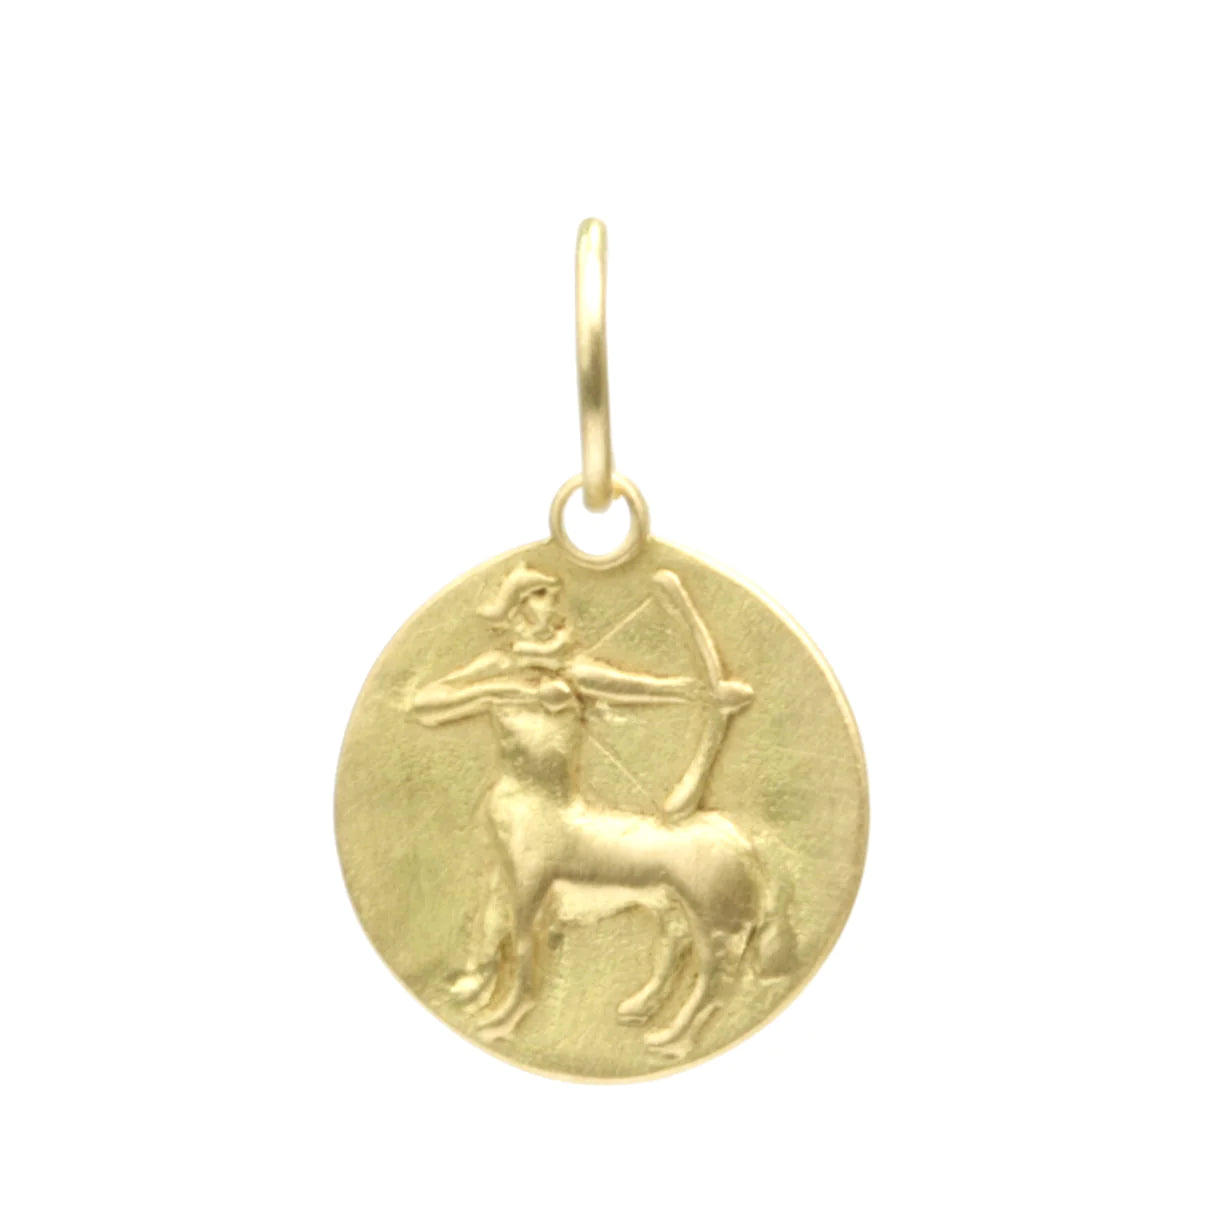 zodiac medal pendant necklace - sagittarius